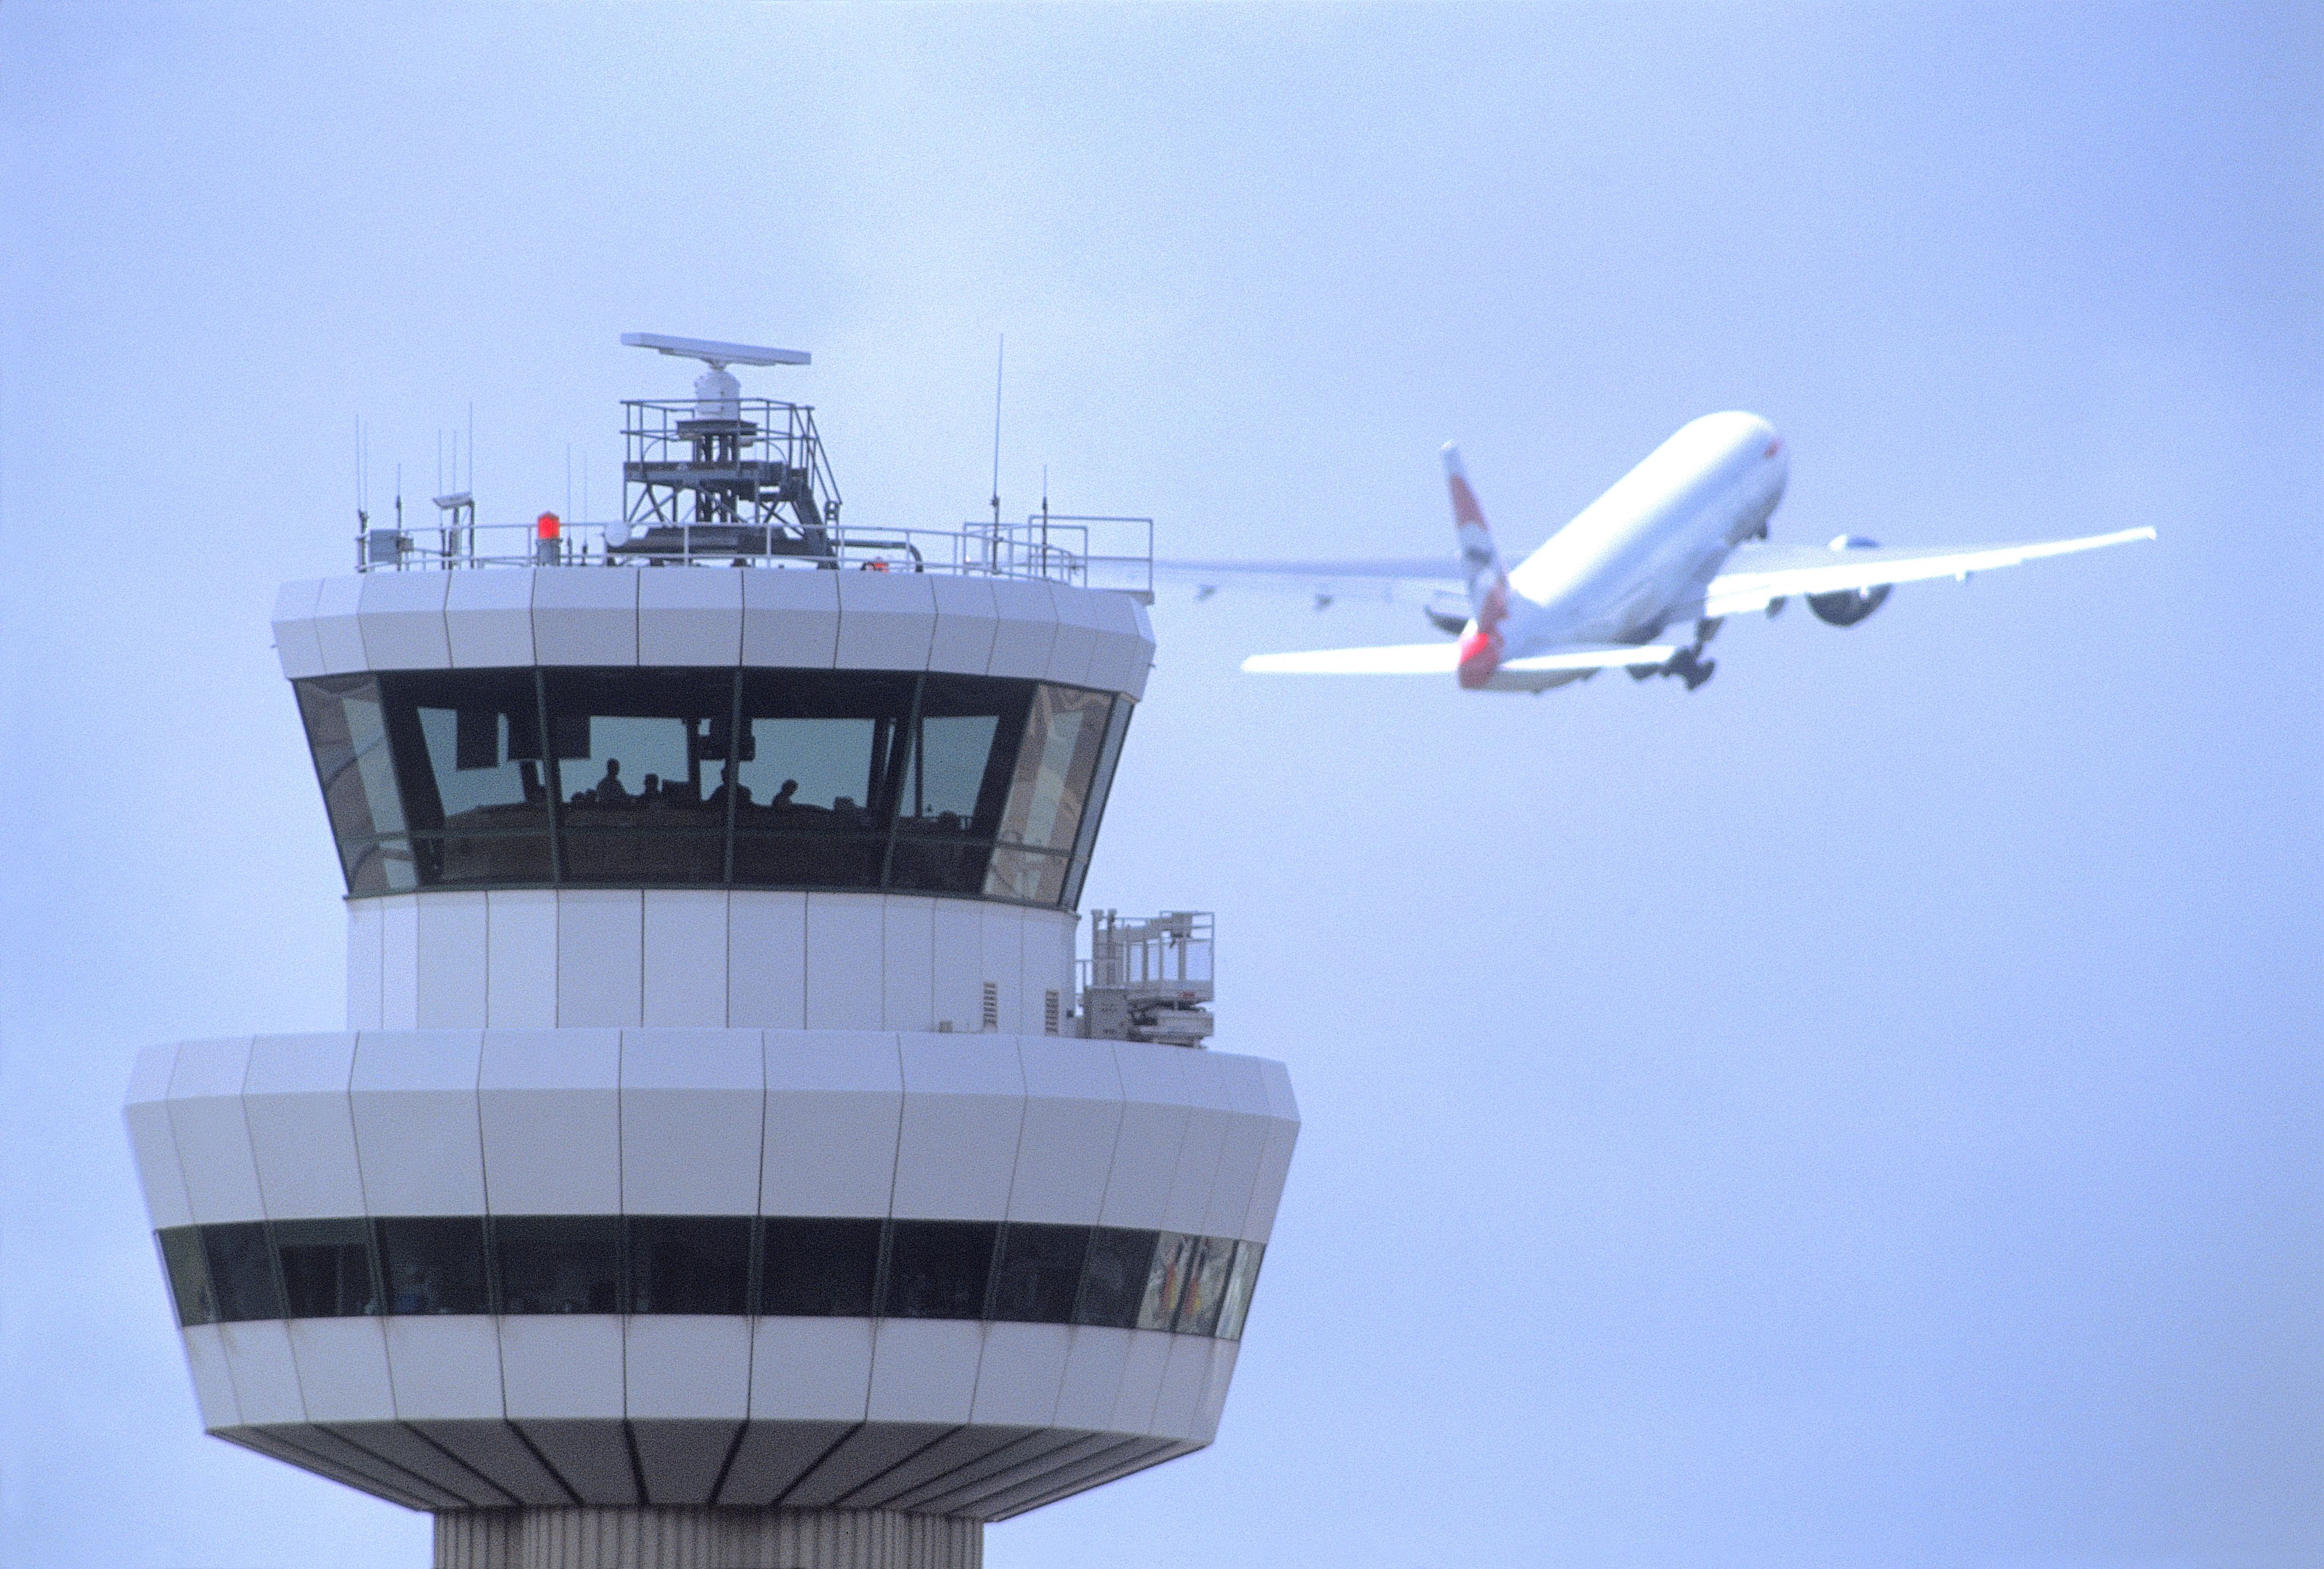 A British Airways plane departs London Gatwick Airport